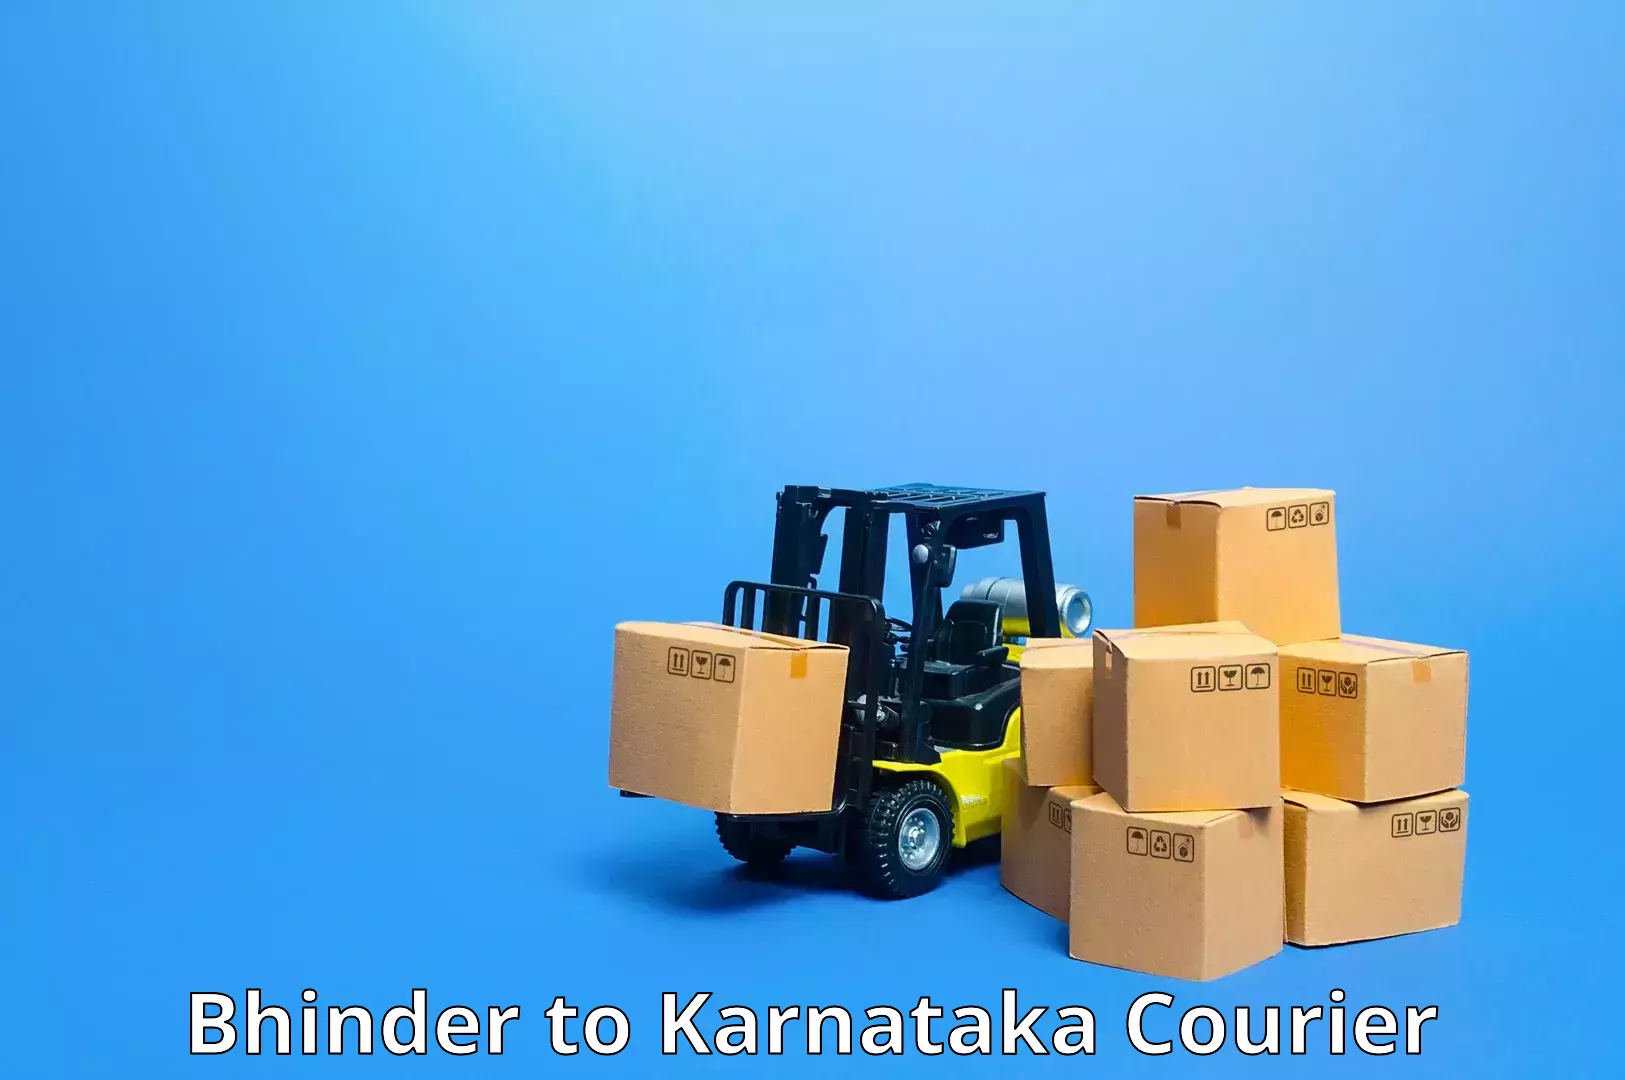 Automated shipping processes Bhinder to Karnataka